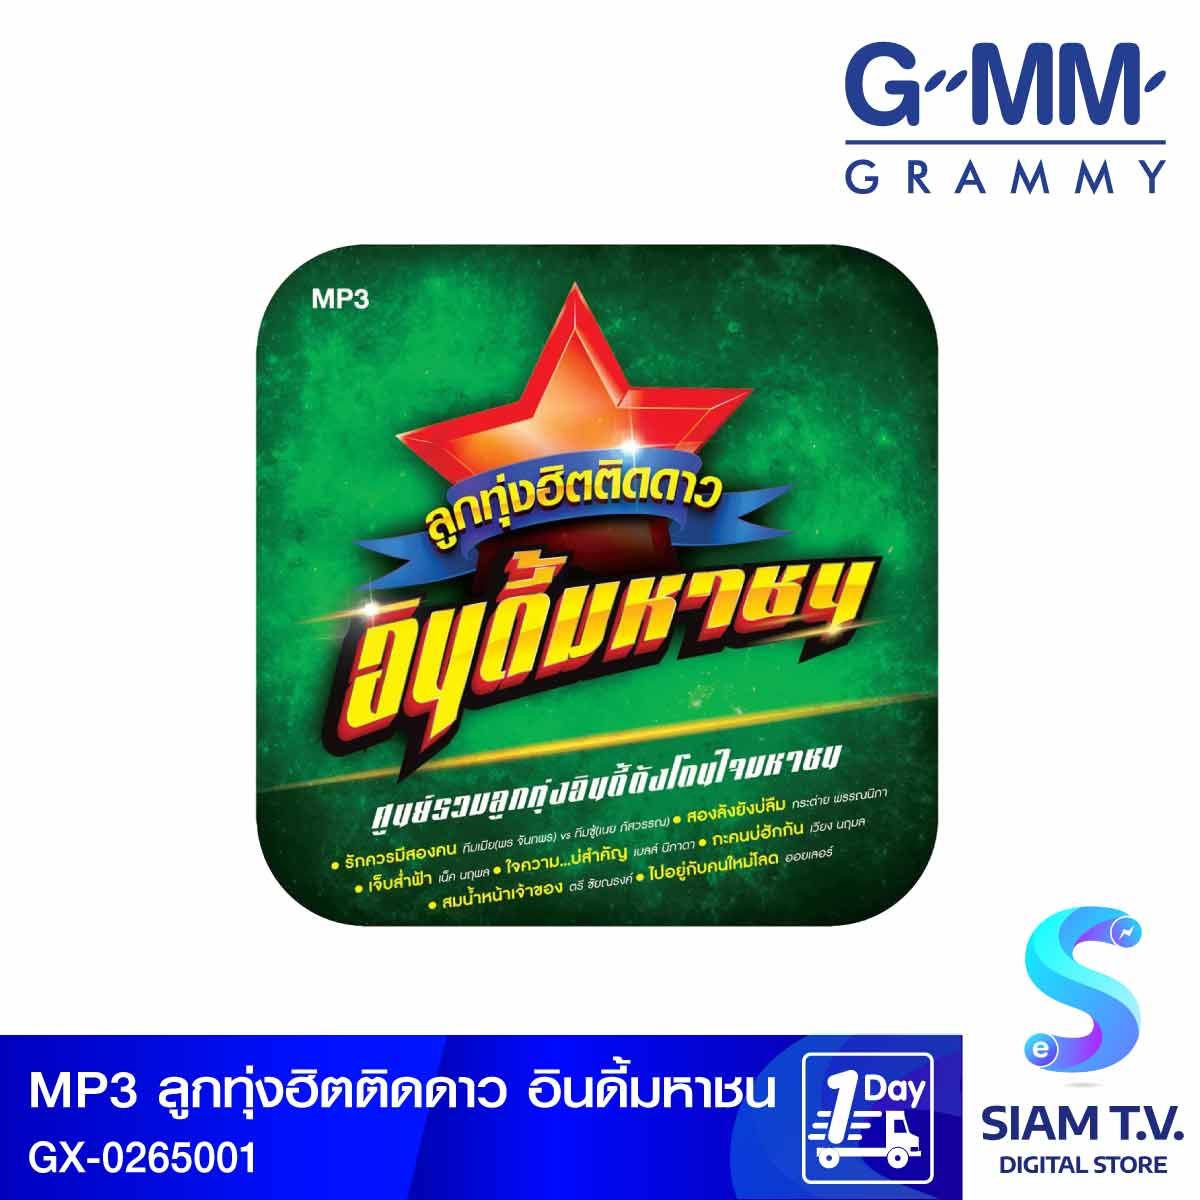 GMM GRAMMY  MP3 เพลงลูกทุ่งฮิตติดดาวอินดี้มหาชน Branded  GX-0265001